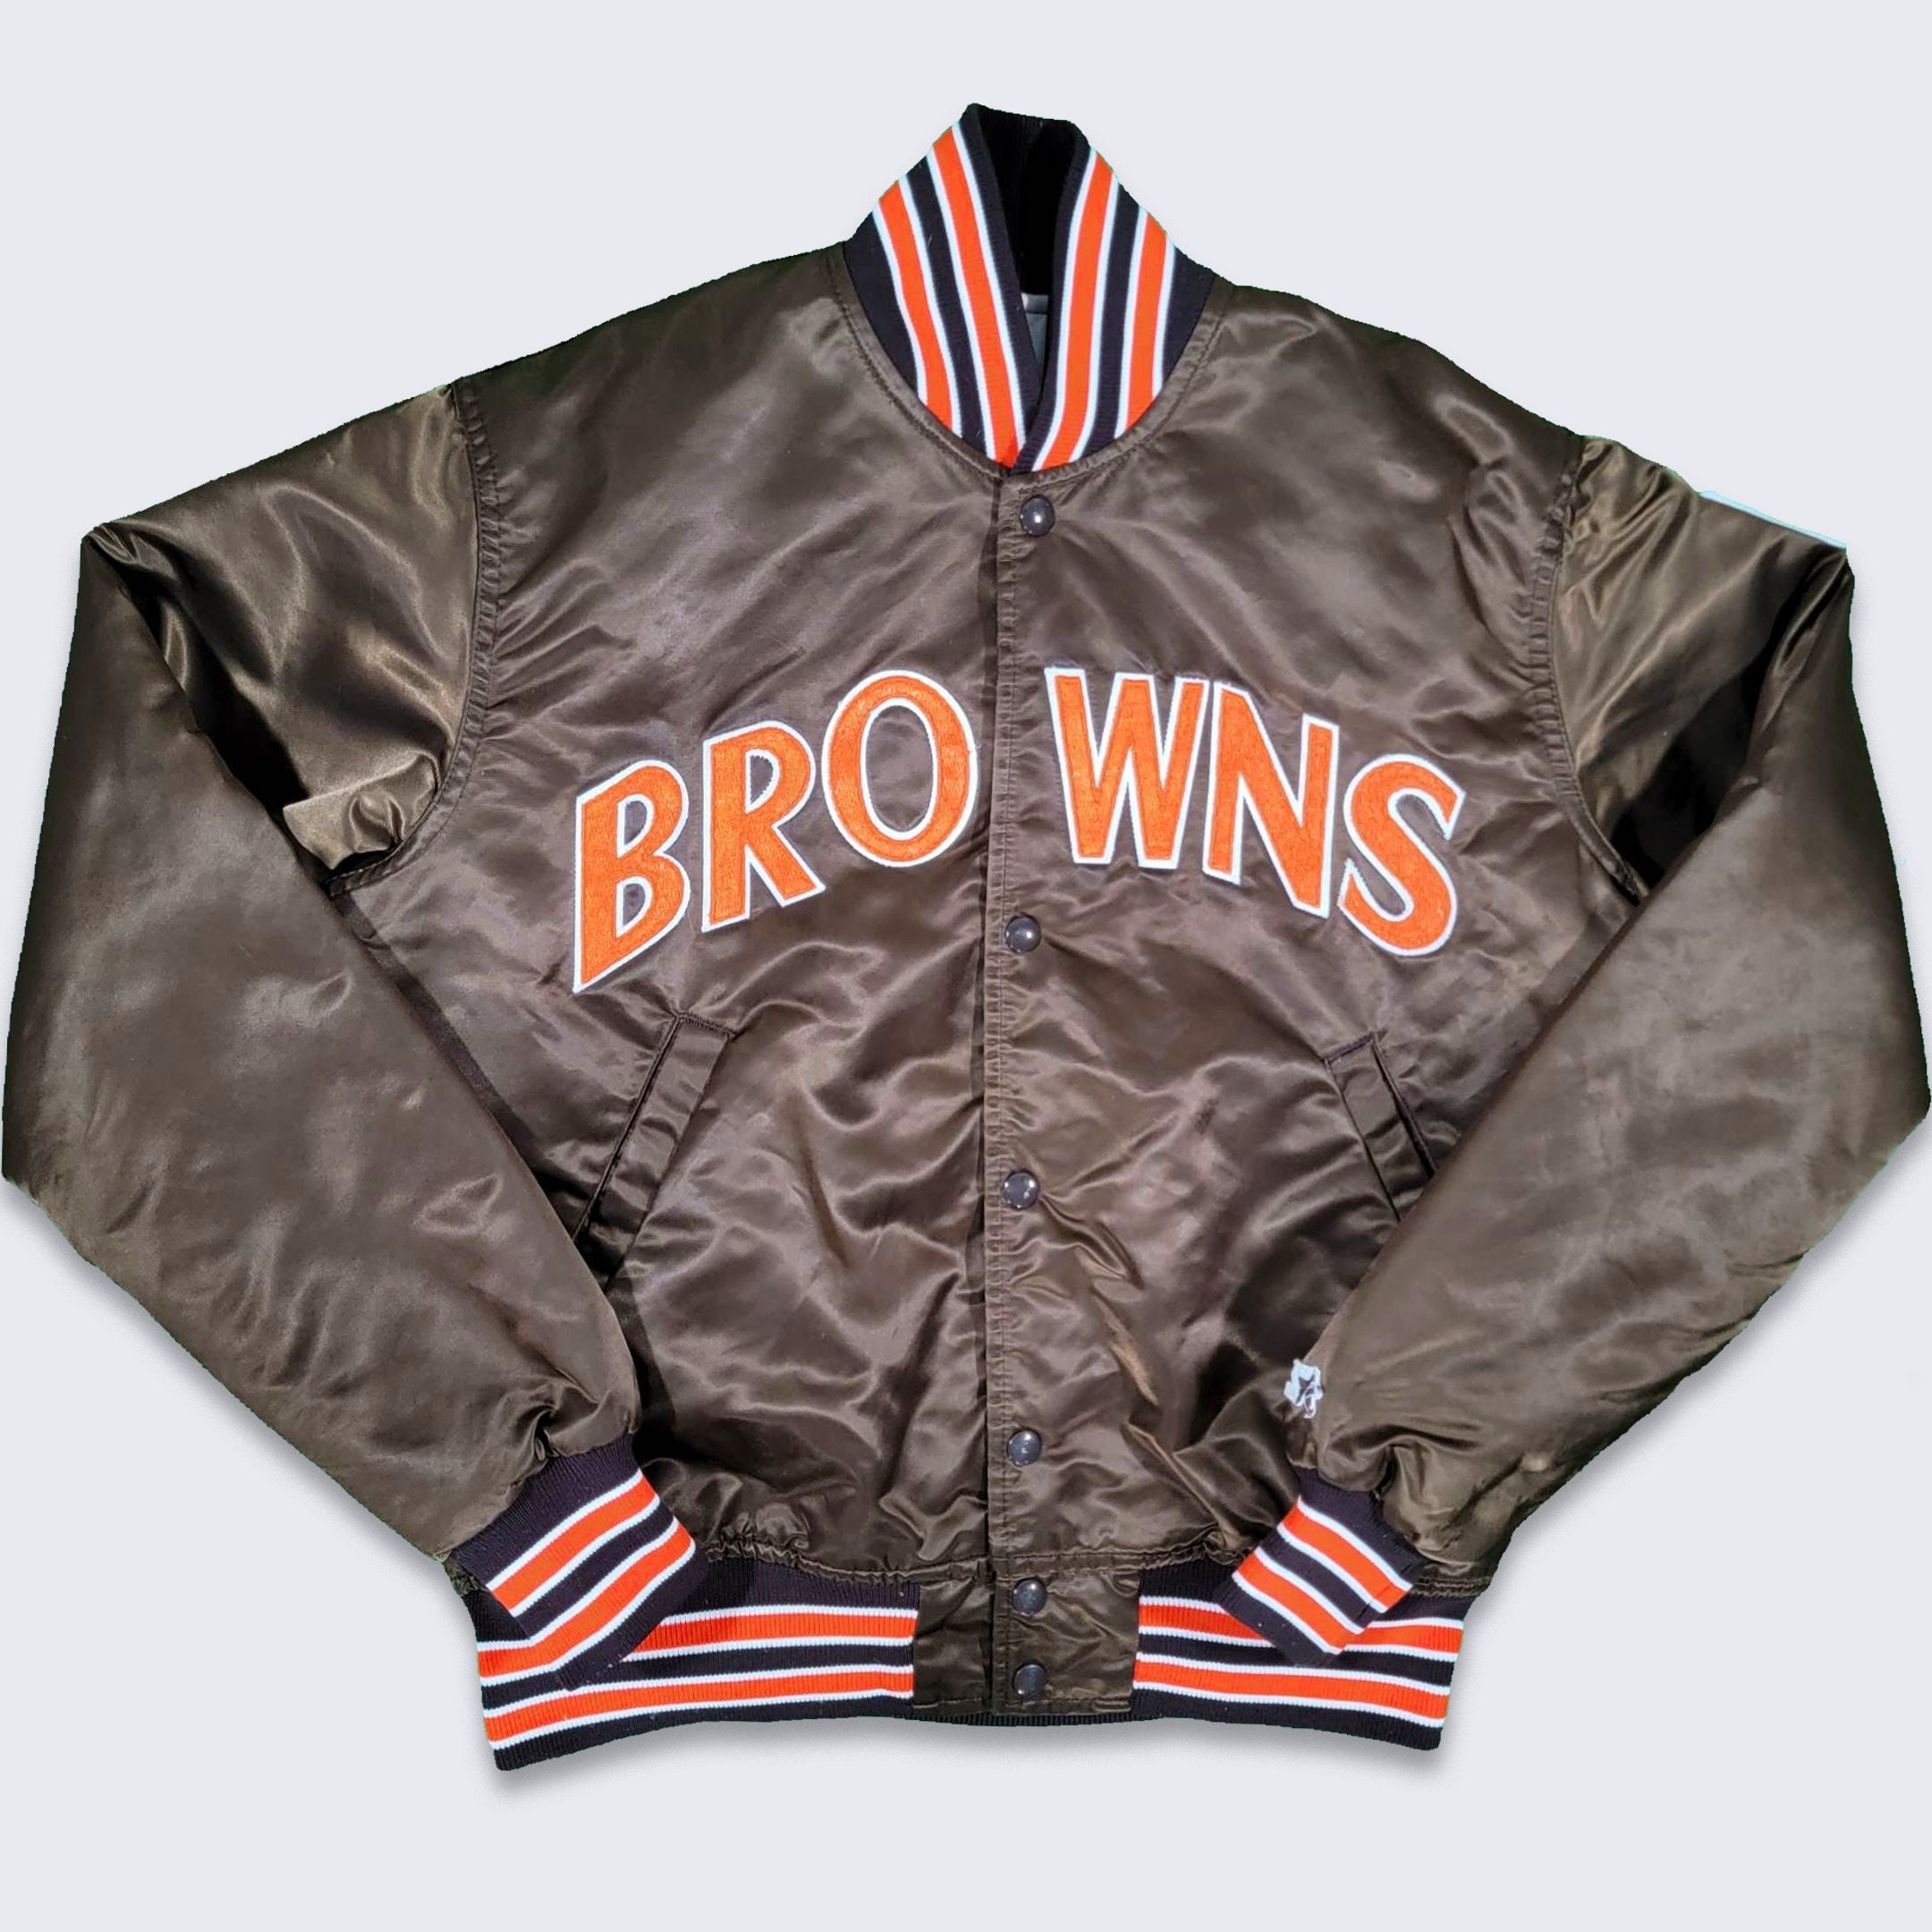 Homage x Starter Cleveland Browns Pullover Jacket from Homage. | Officially Licensed Vintage NFL Apparel from Homage Pro Shop.